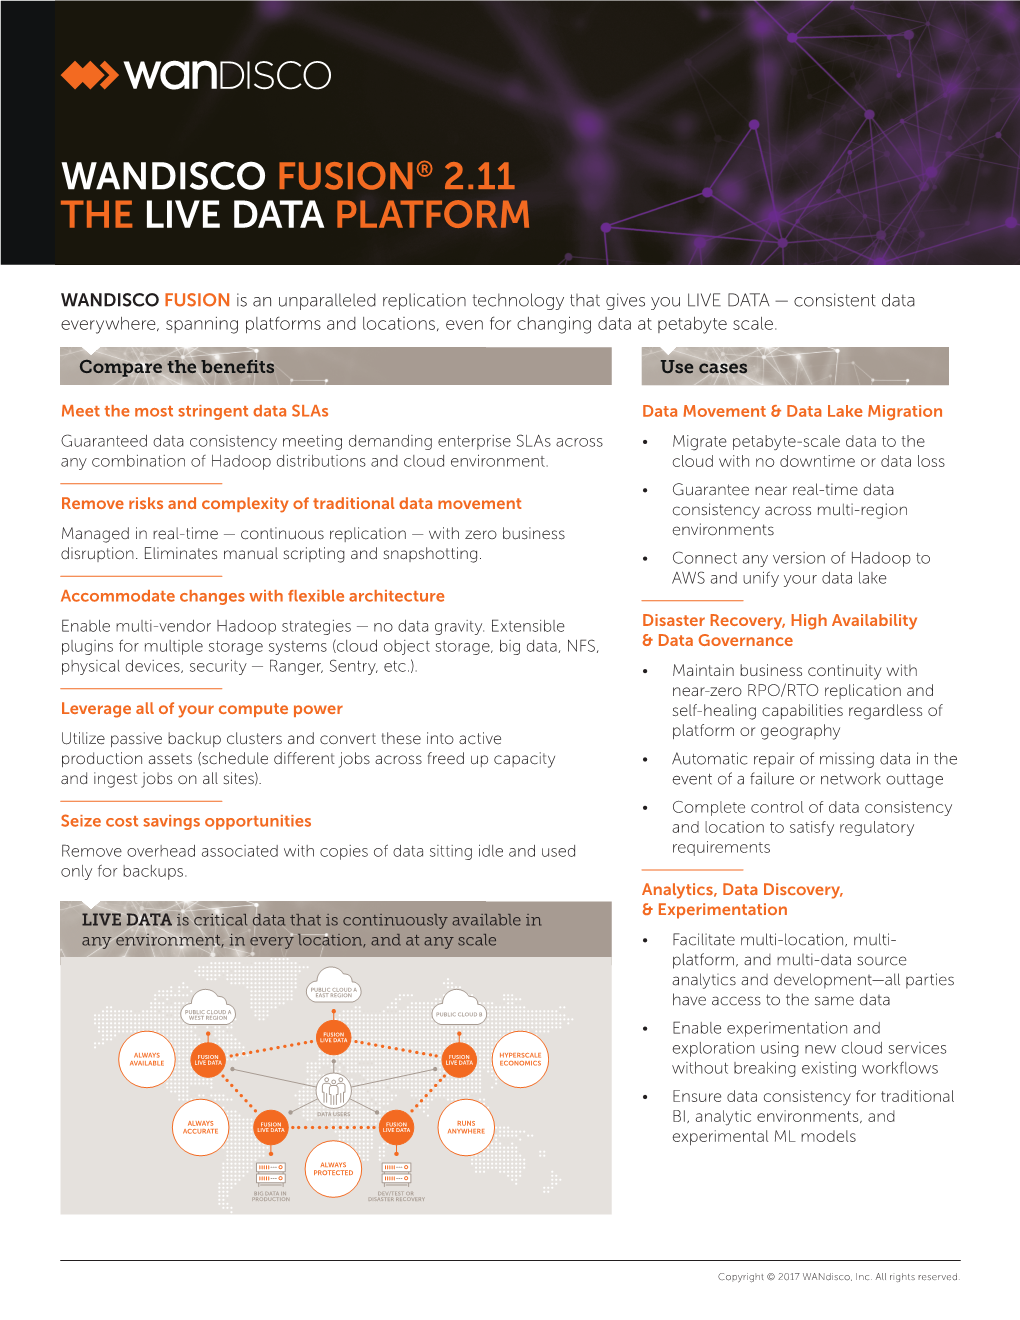 Wandisco Fusion® 2.11 the Live Data Platform